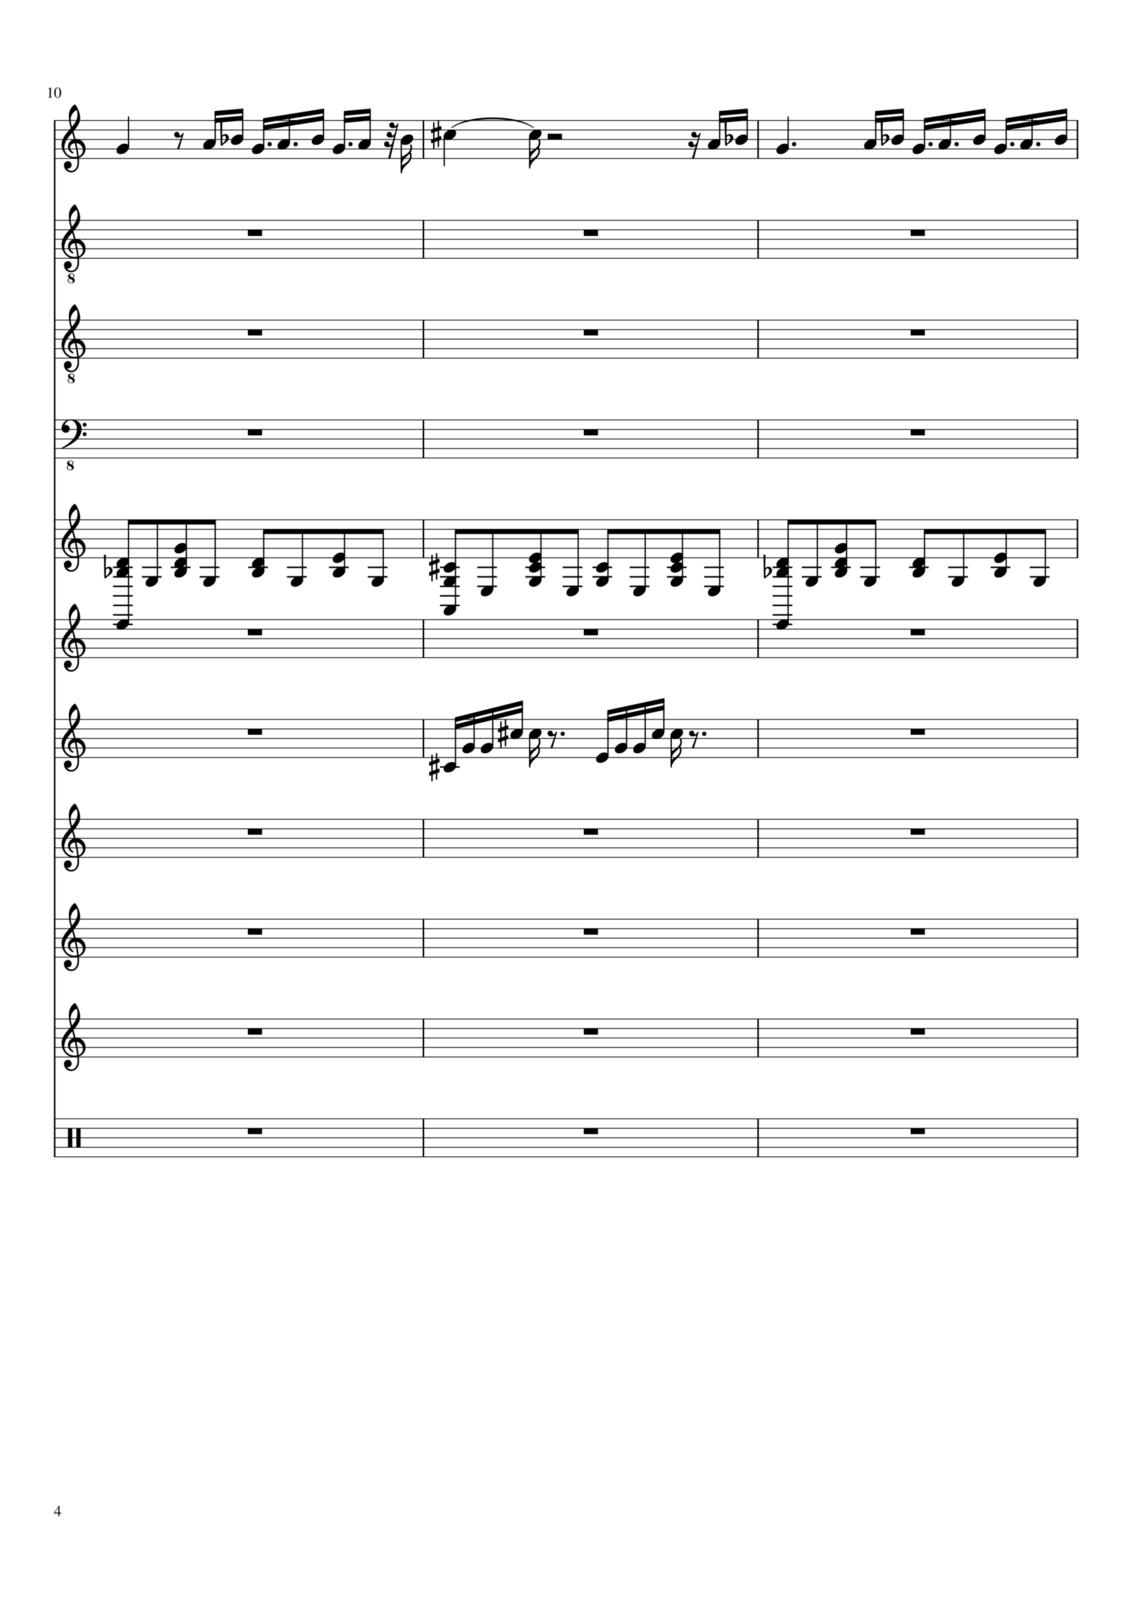 Gorod, kotorogo net slide, Image 4